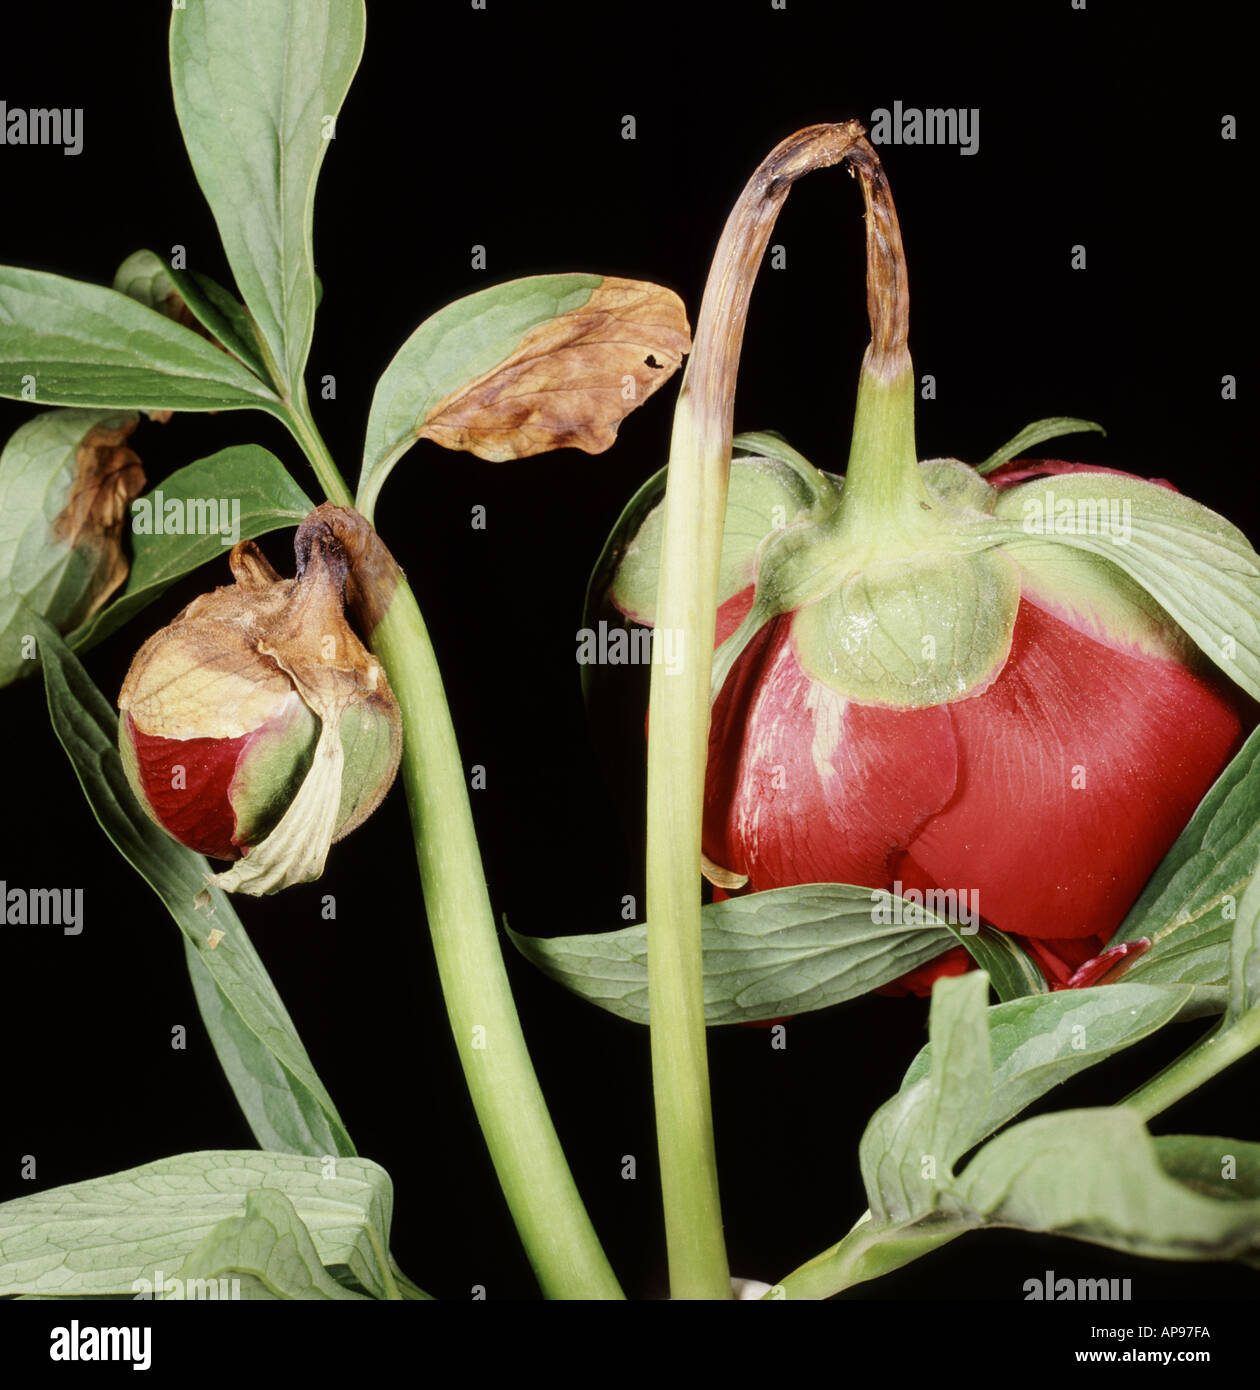 Peony Wilt oder Blight (Botrytis paeoniae) auf Peony Blume mit erkrankten Blütenknospen Stockfoto